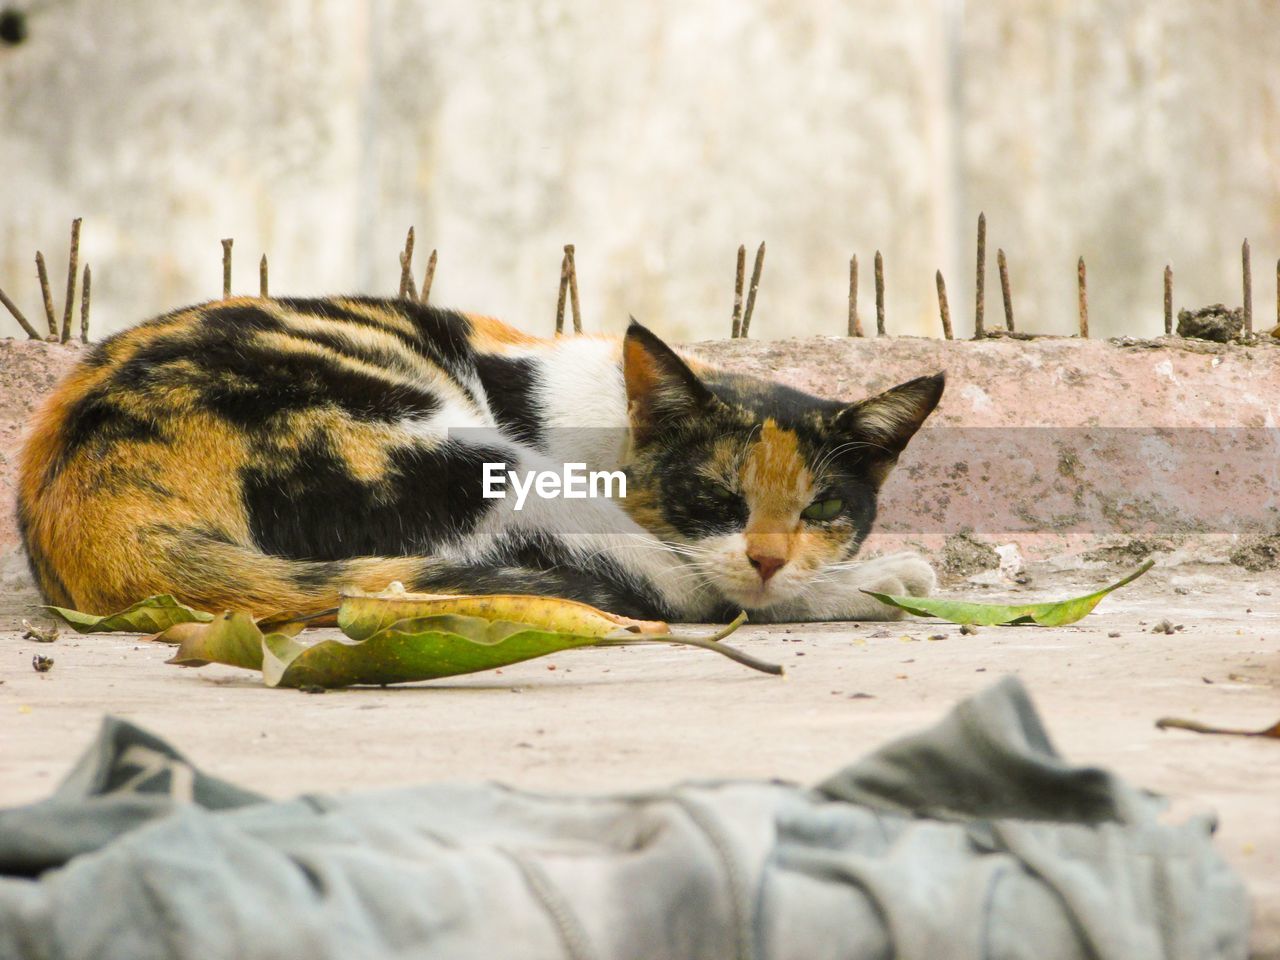 Cat lying down closeup photography